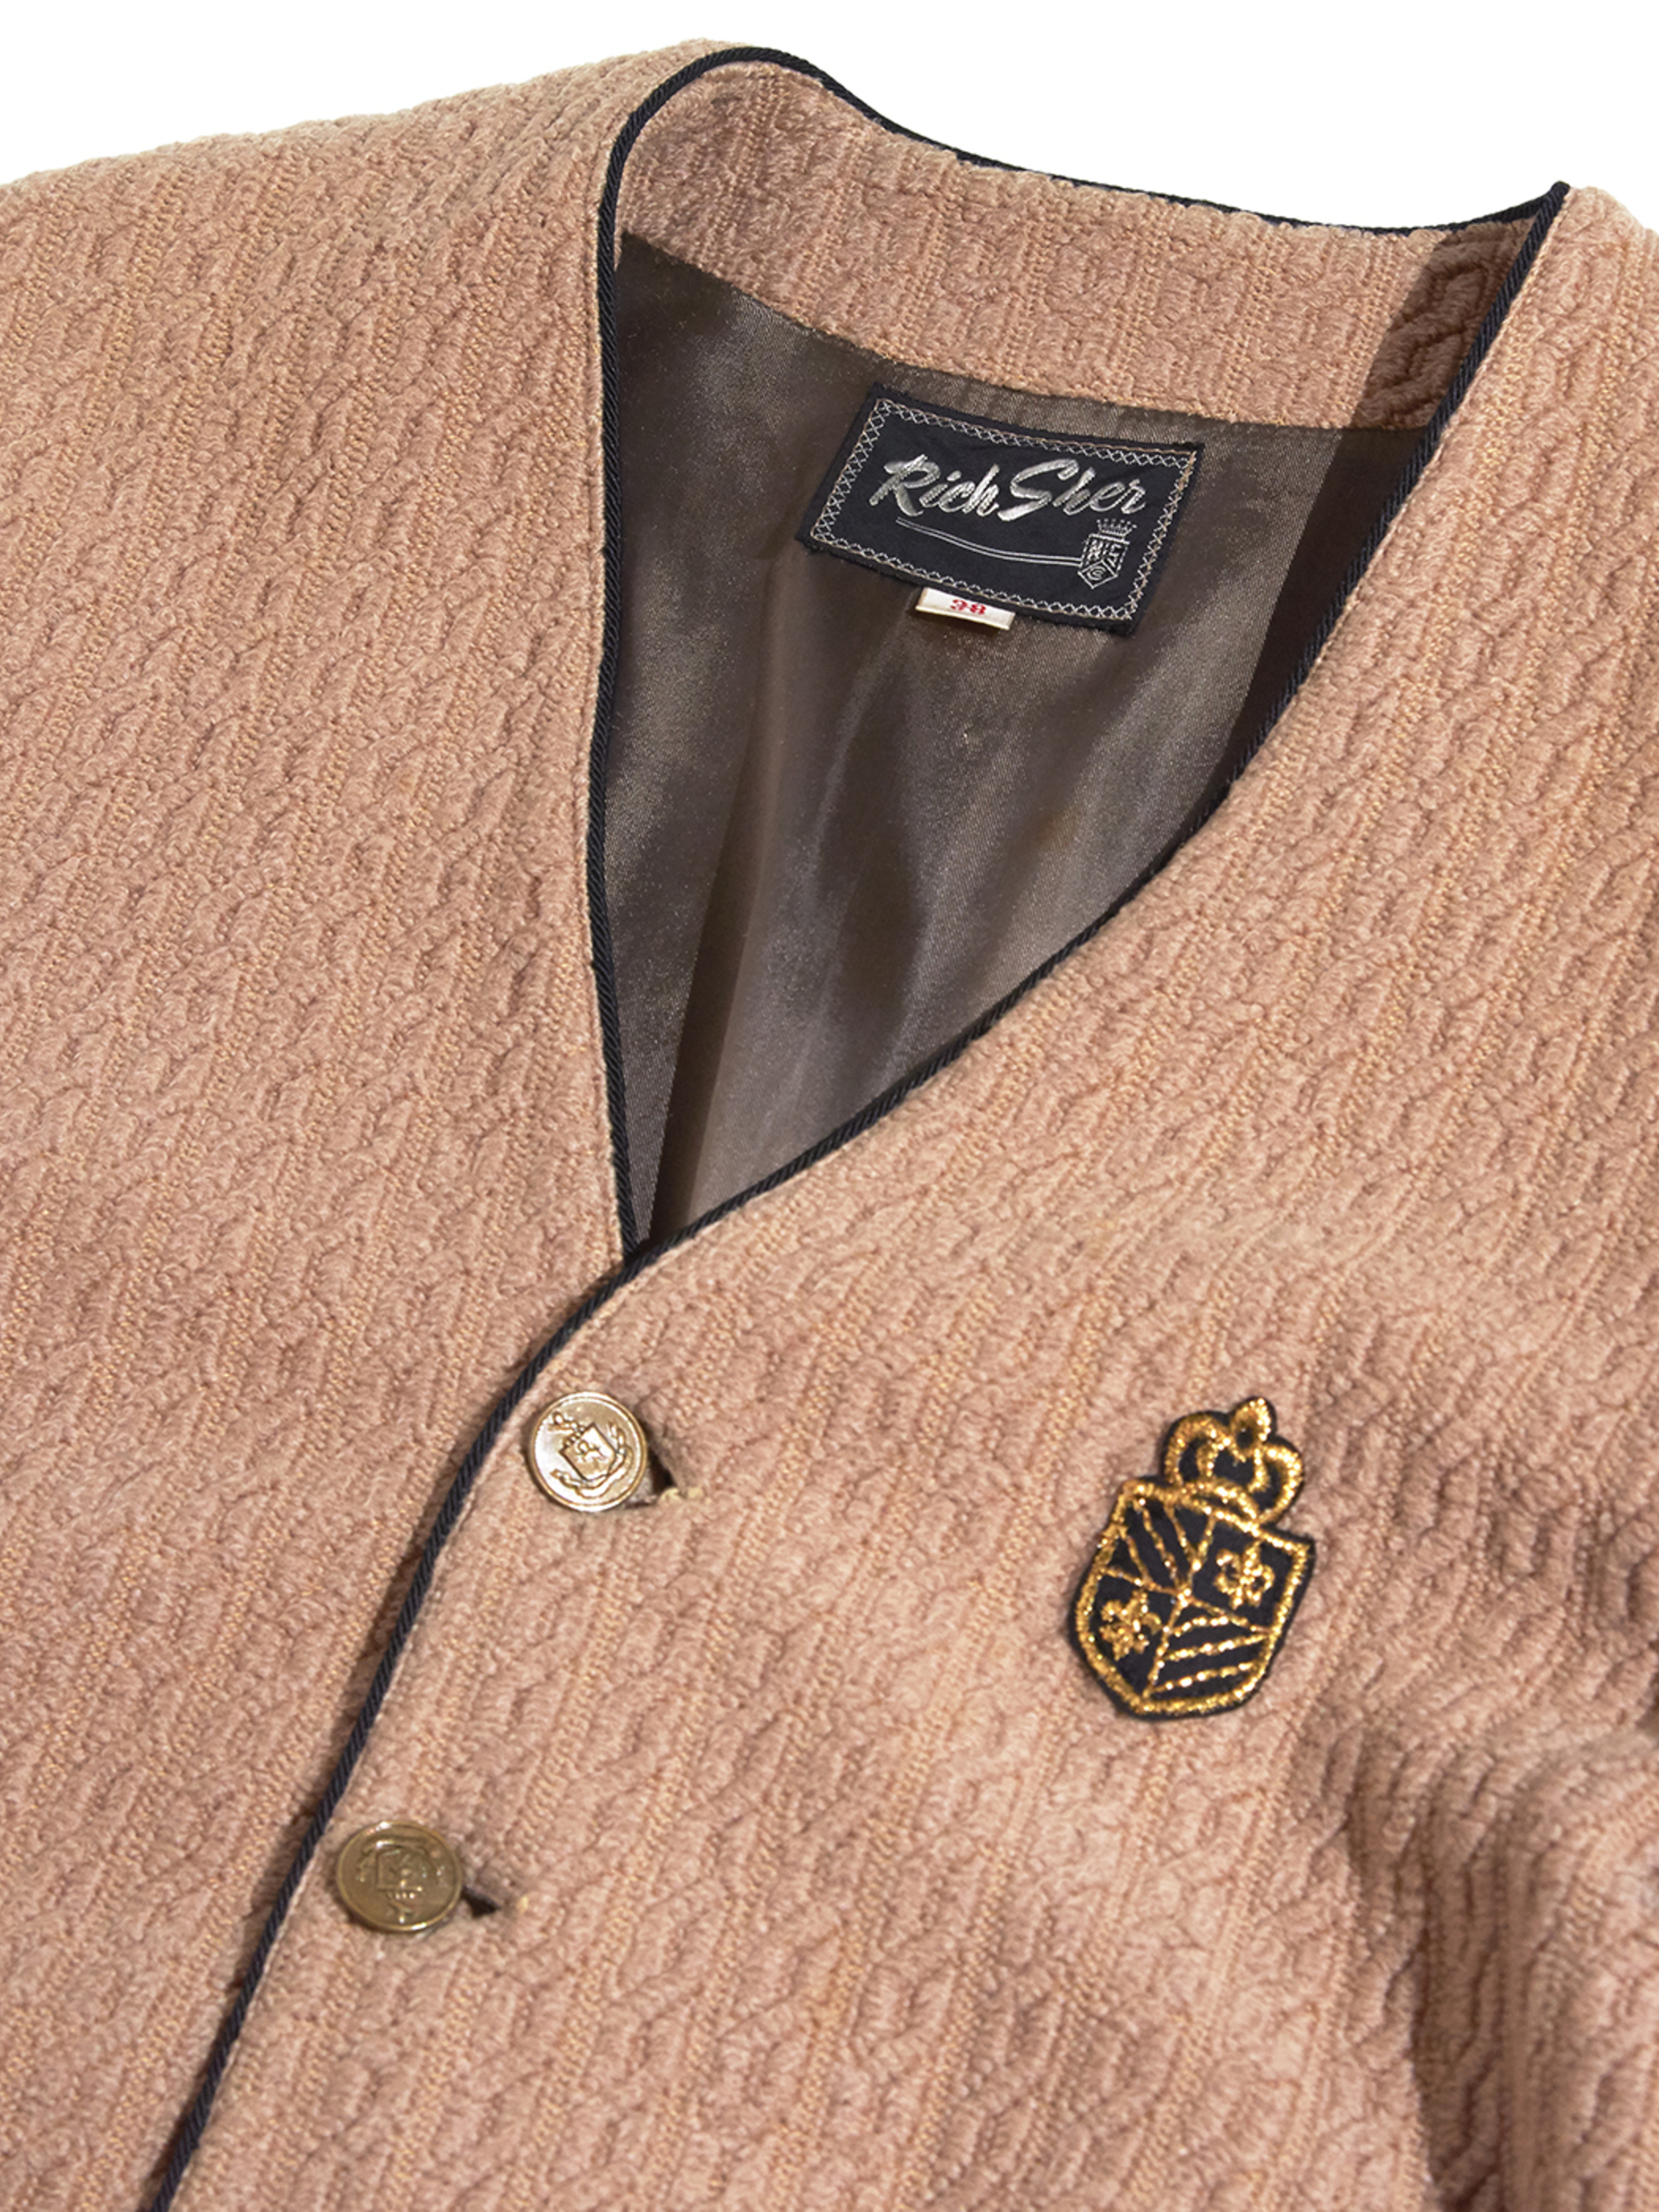 1960s "Rich Sher" collarless knit jacket -BEIGE-